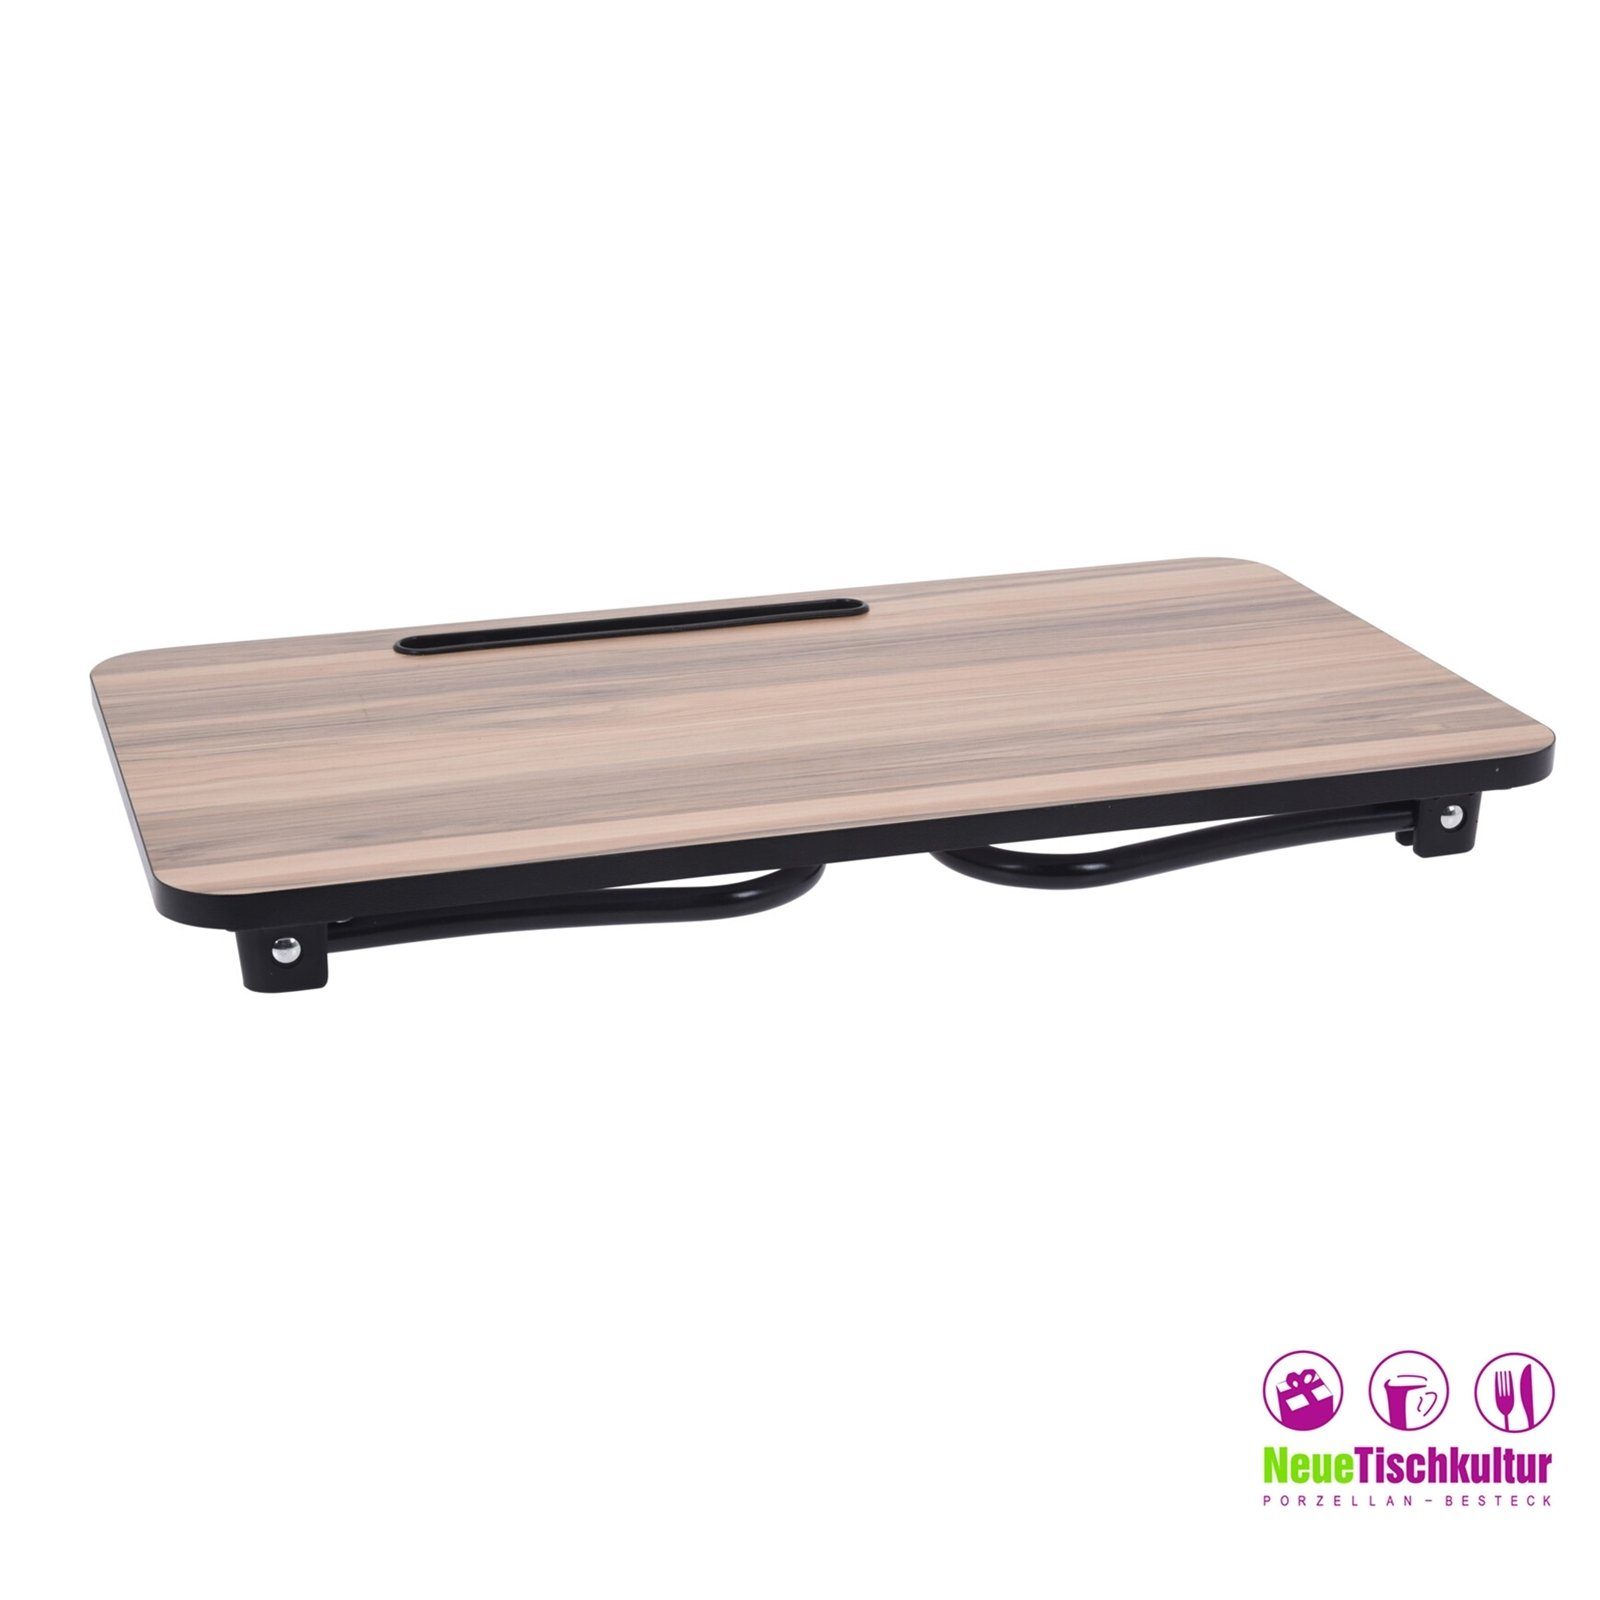 Neuetischkultur Tablett Bett-Serviertisch, klappbare Beine Holz/Metall,  Holz, Metall, (Stück, 1-tlg)